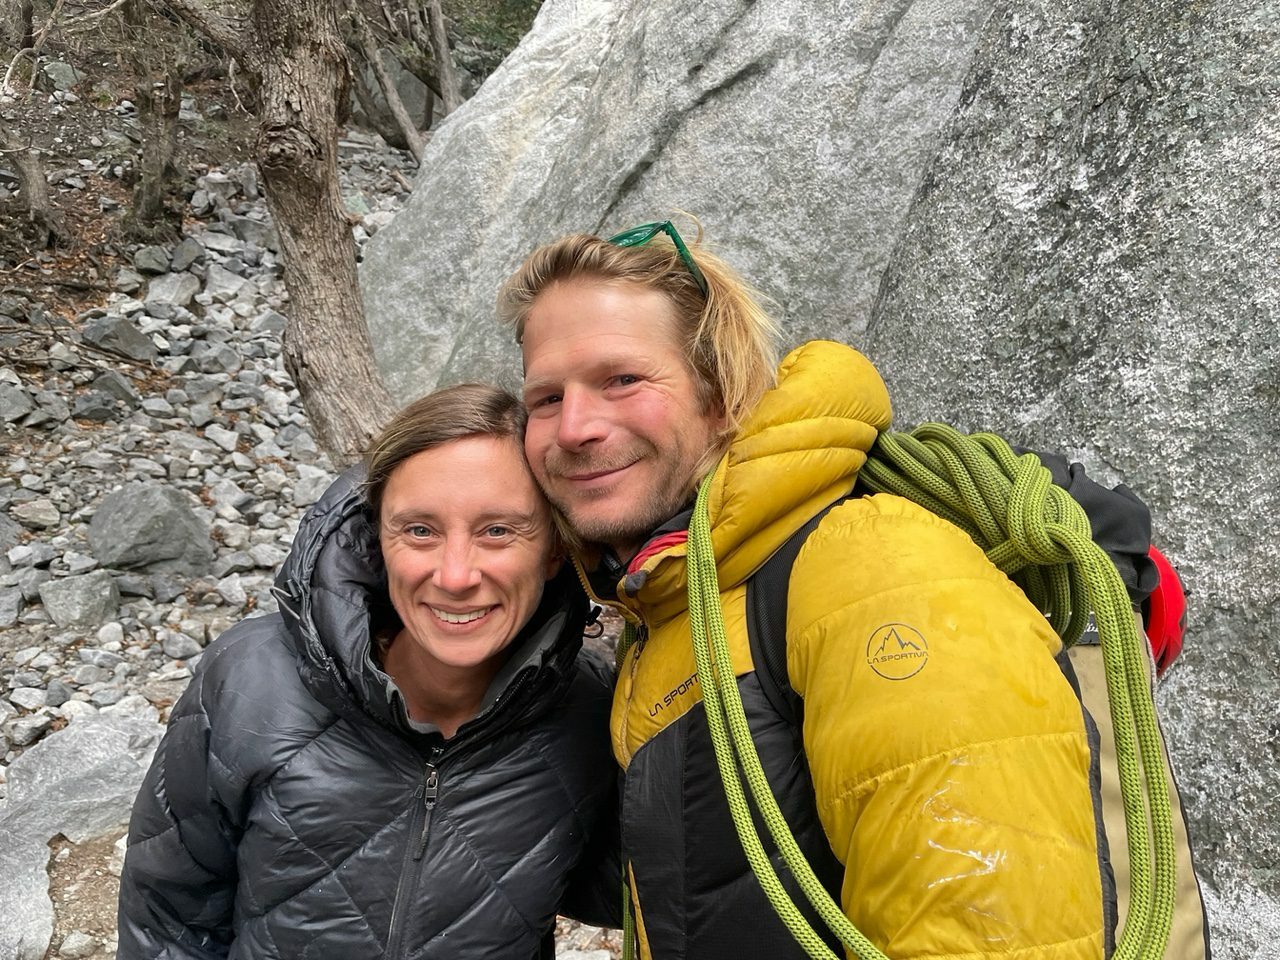 John and his wife Paula Wild in Yosemite. Photo: Van Leuven